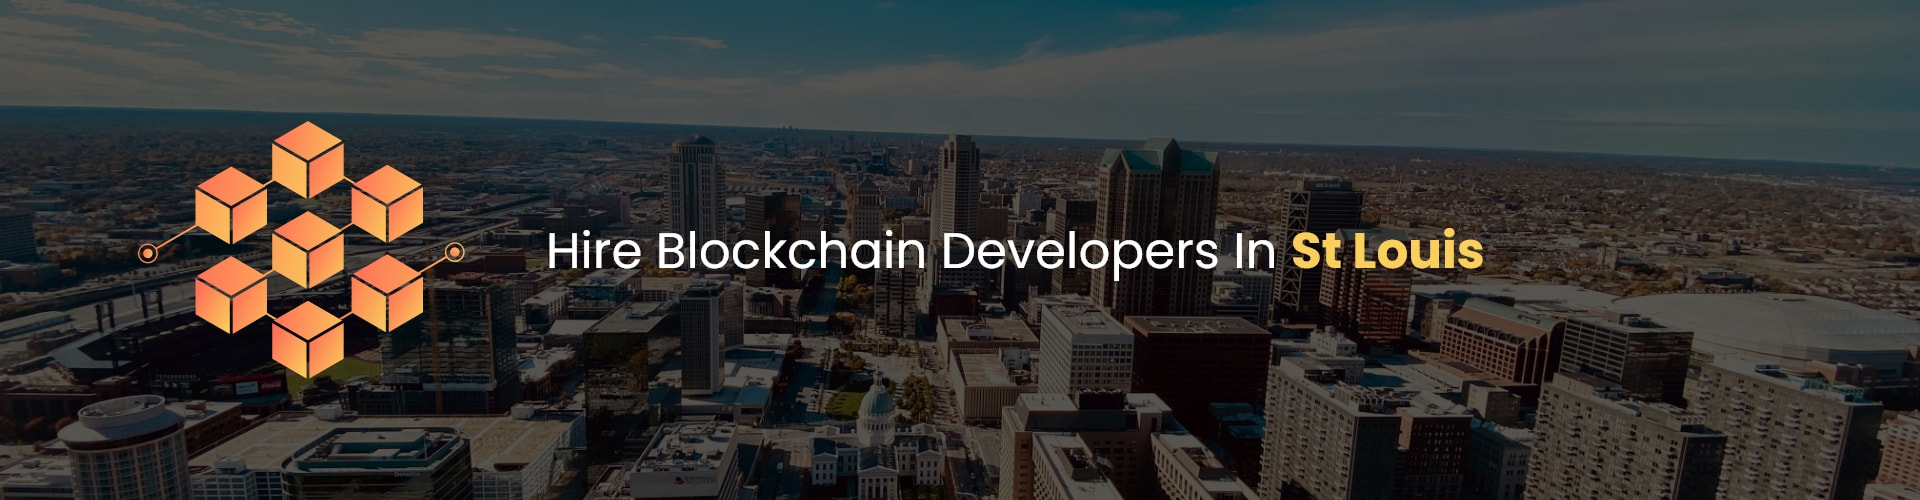 hire blockchain developers in st louis